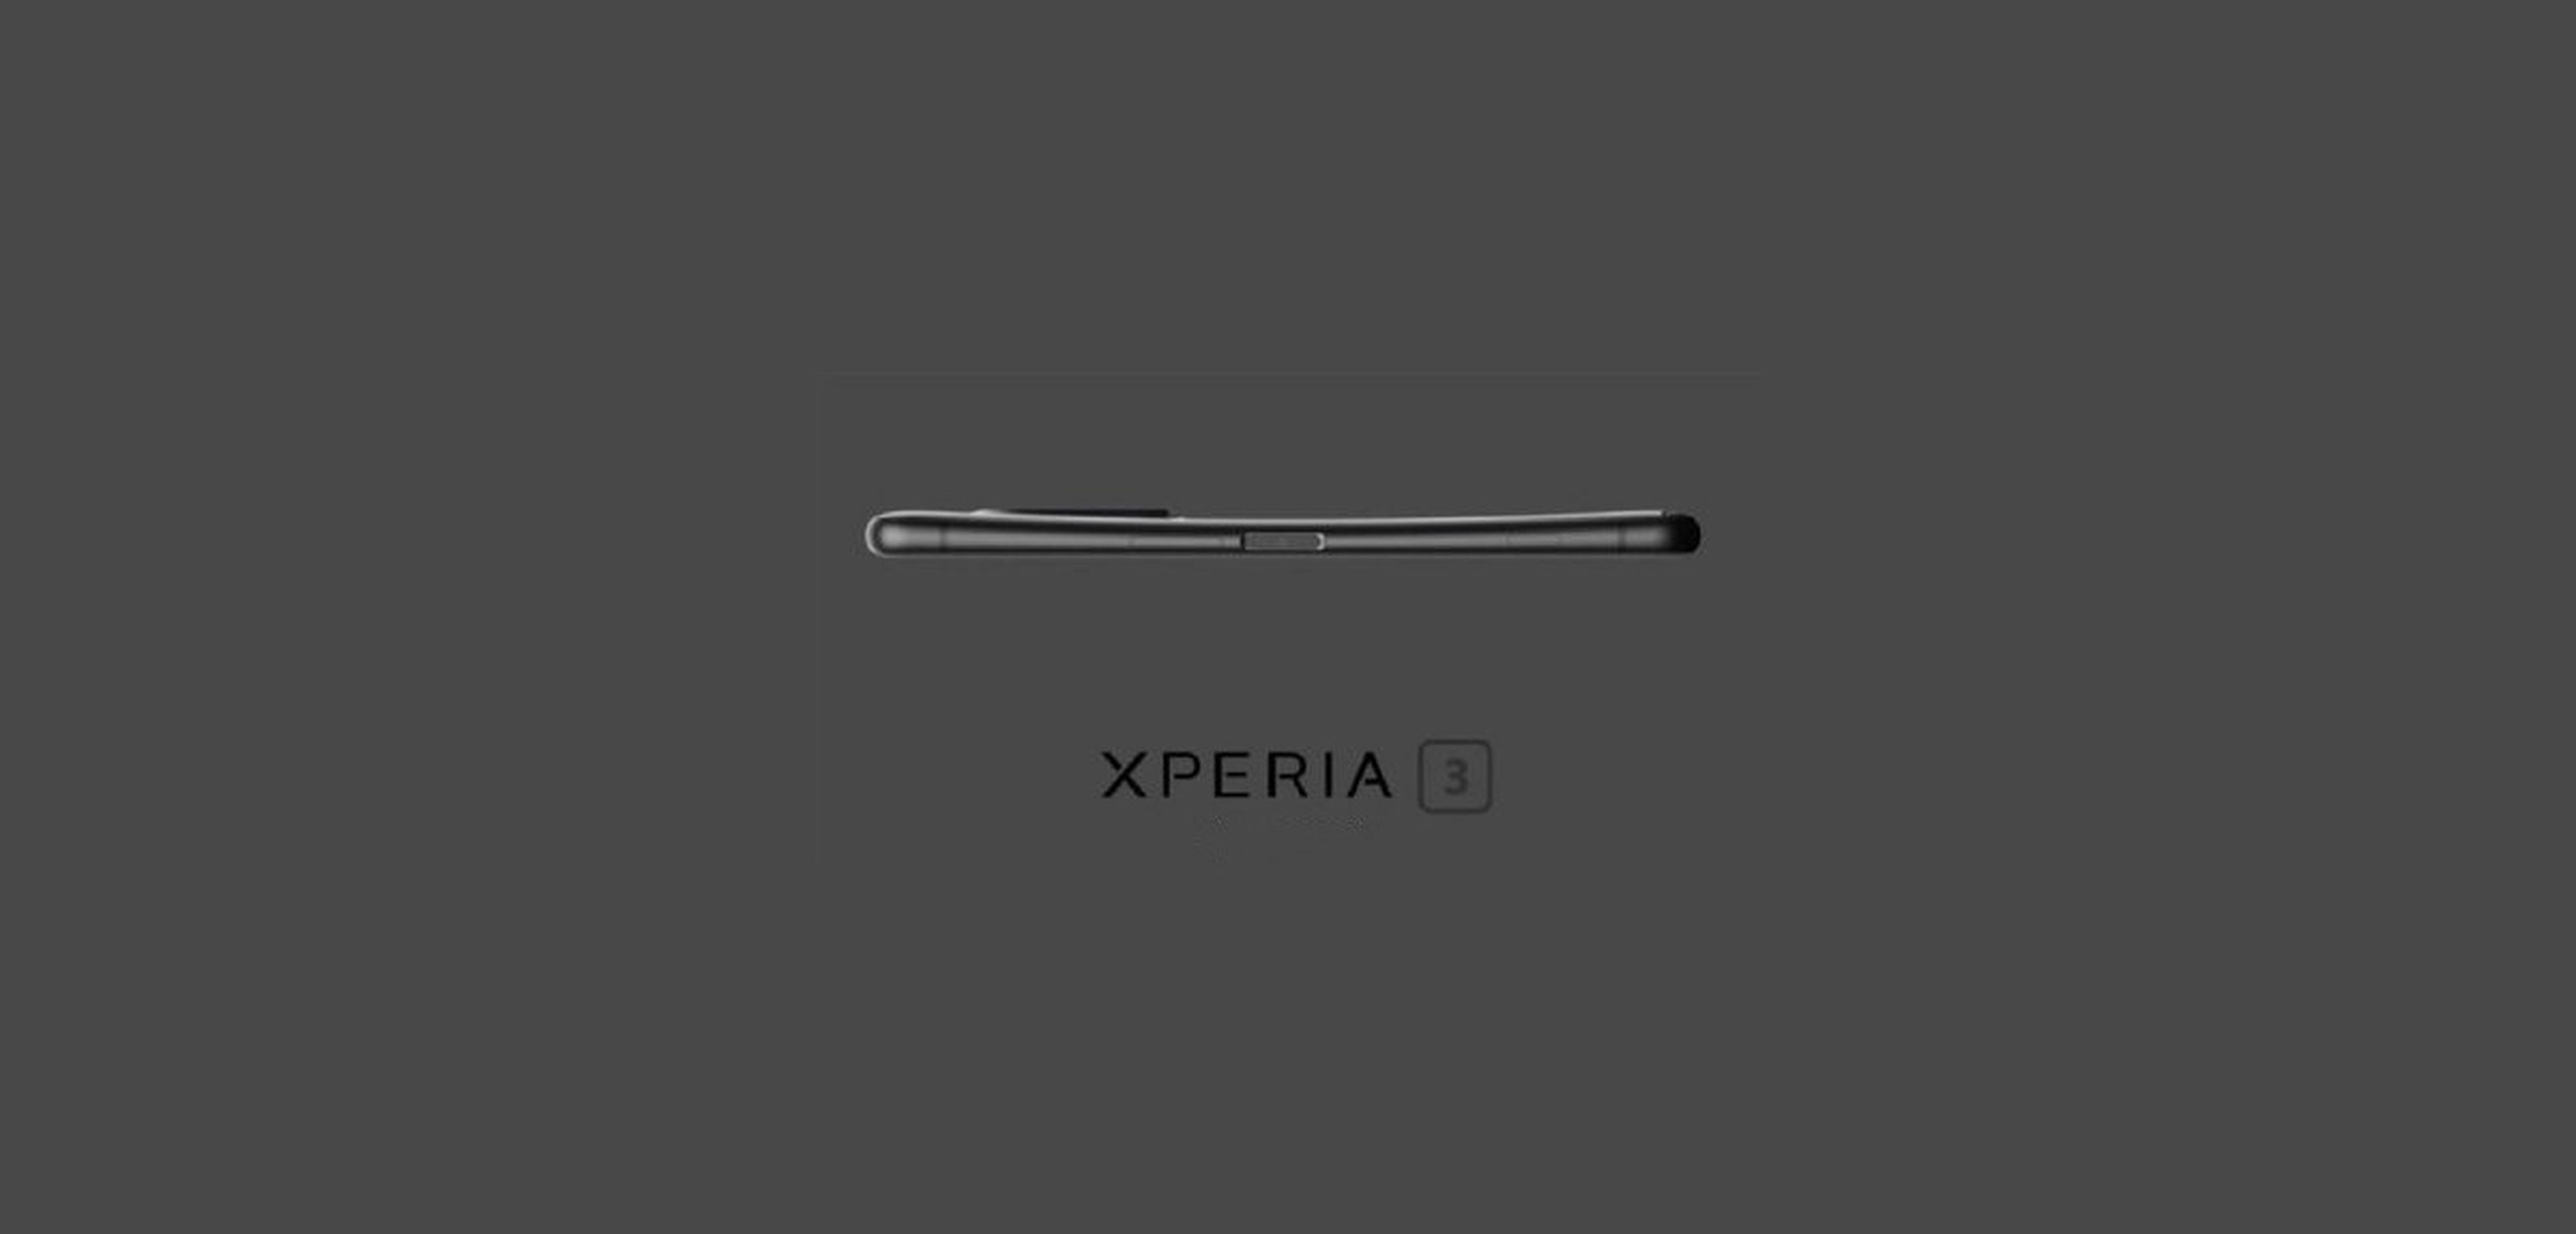 Xperia 3 Sony